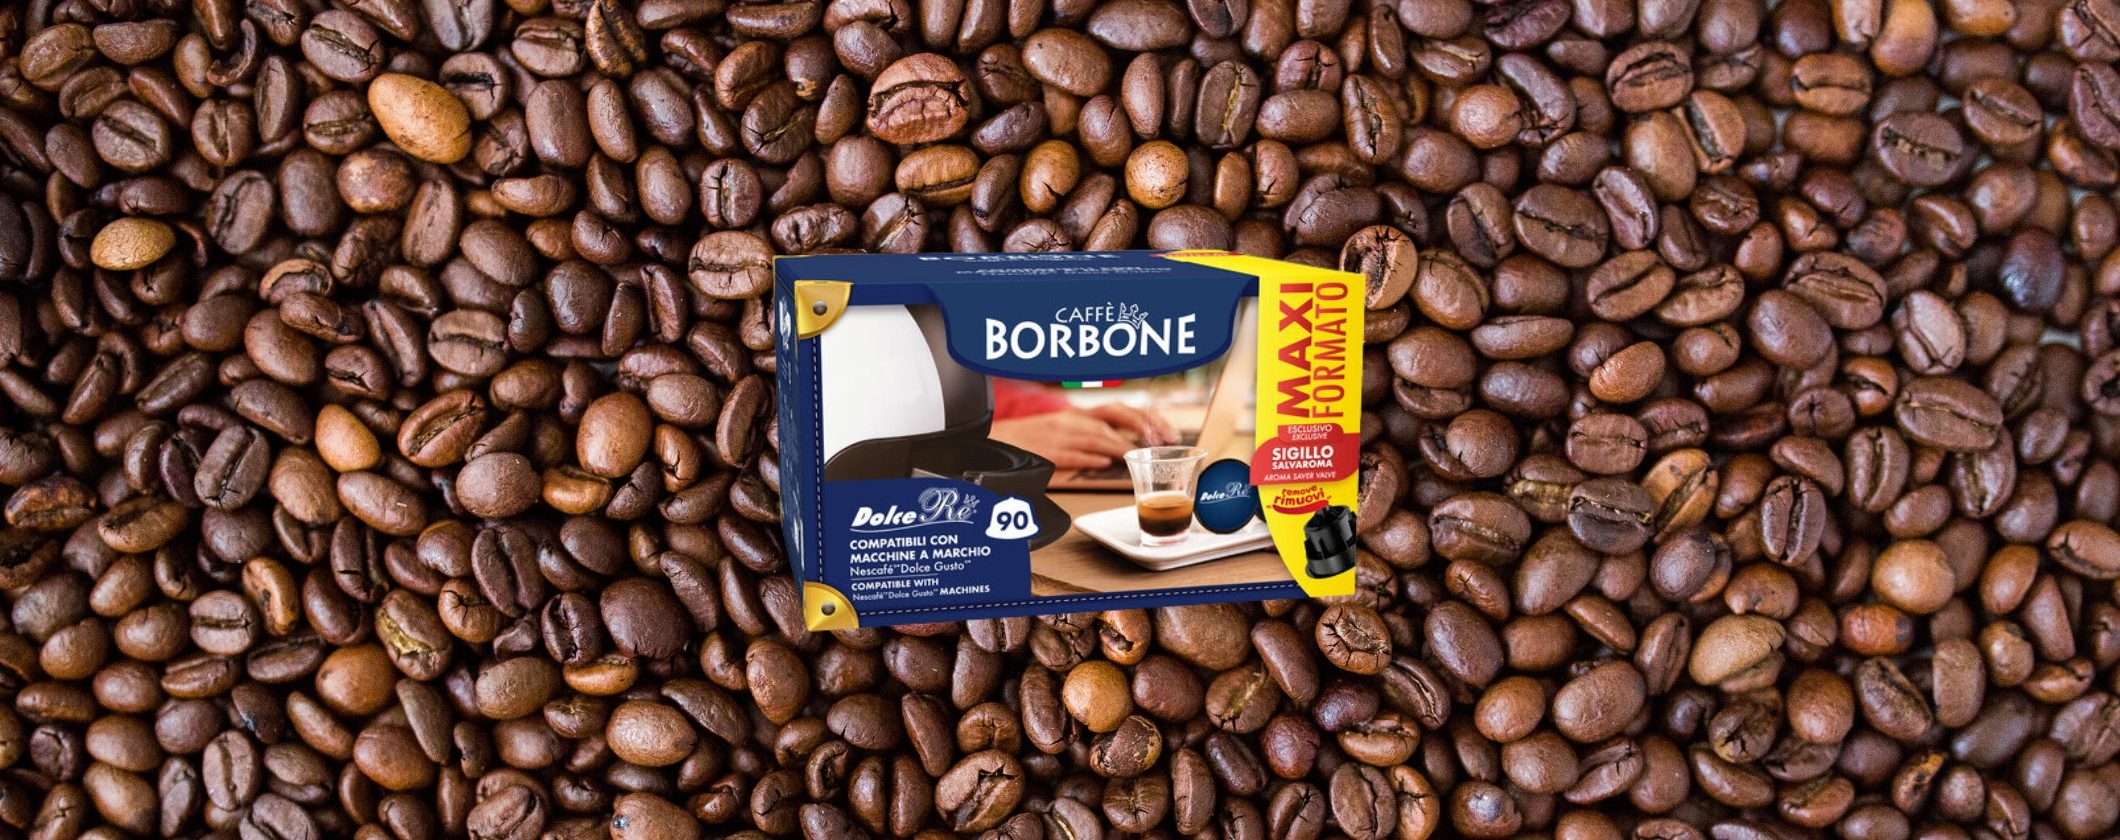 Capsule Caffè Borbone Dolce Gusto a 0,19€: offerta bomba eBay